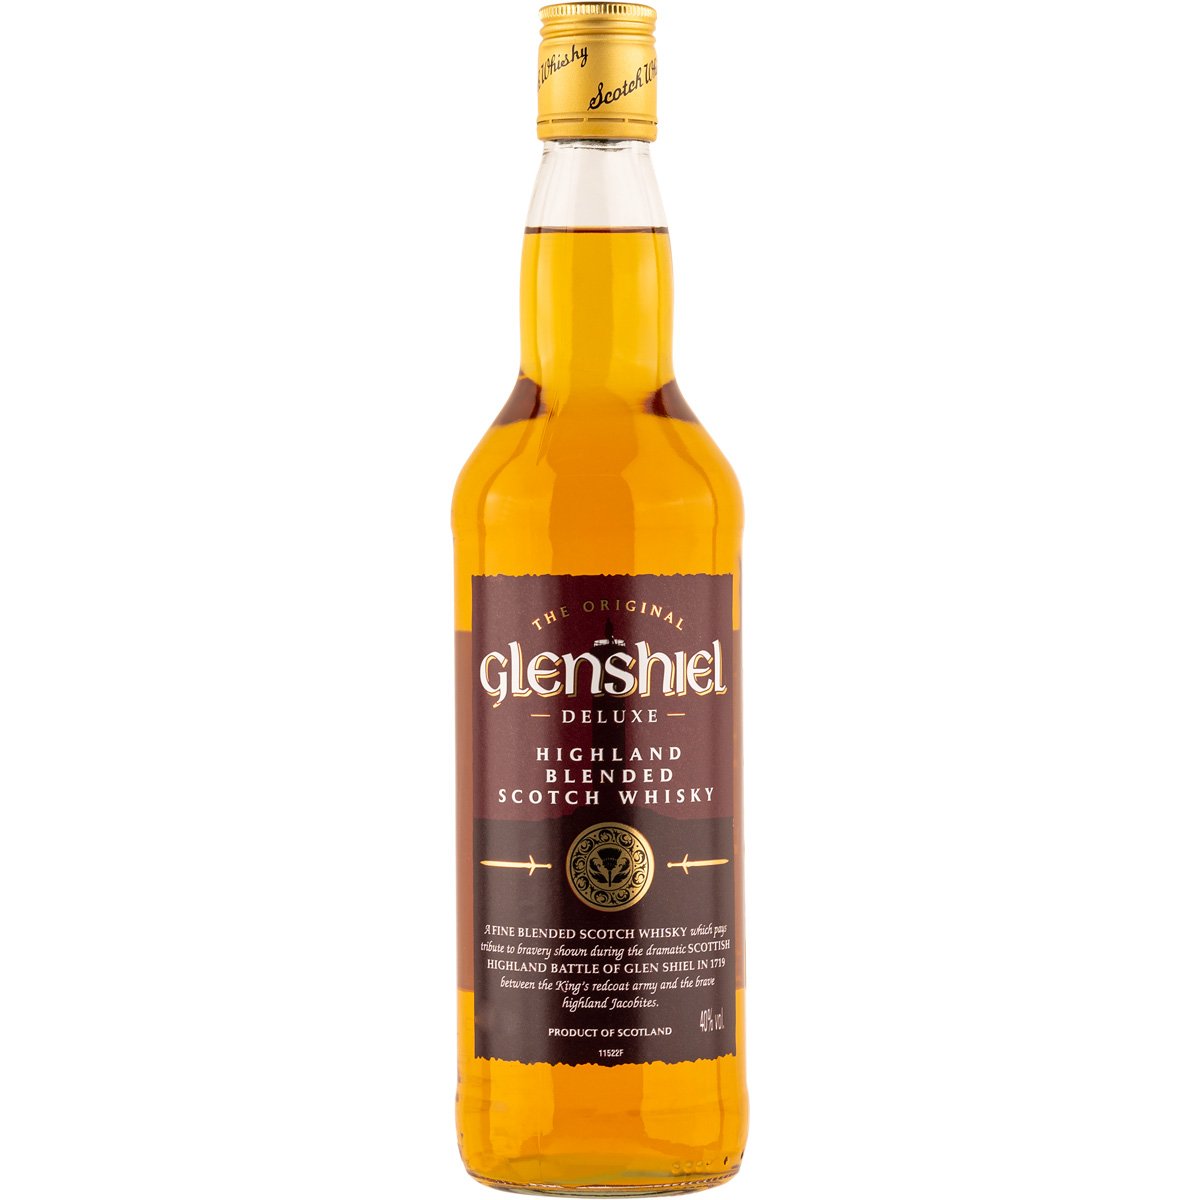 Віски Loch Lomond Glenshiel Deluxe Highland Blended Scotch Whisky 40% 0.7 л - фото 1